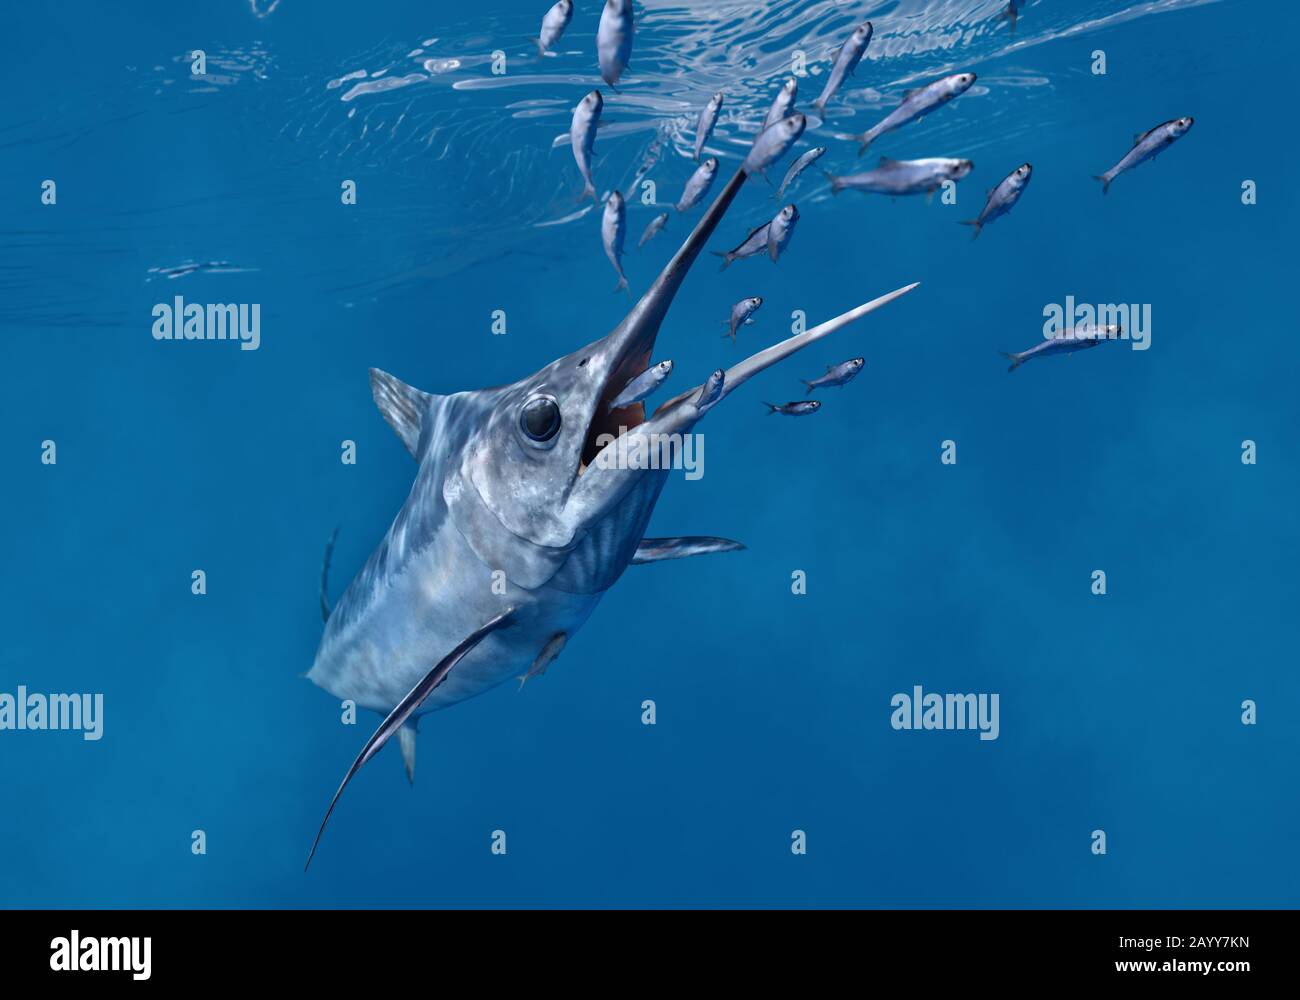 Illustration of Xiphiorhynchus, an extinct genus of prehistoric swordfish that lived from the Eocene until the Miocene. Stock Photo